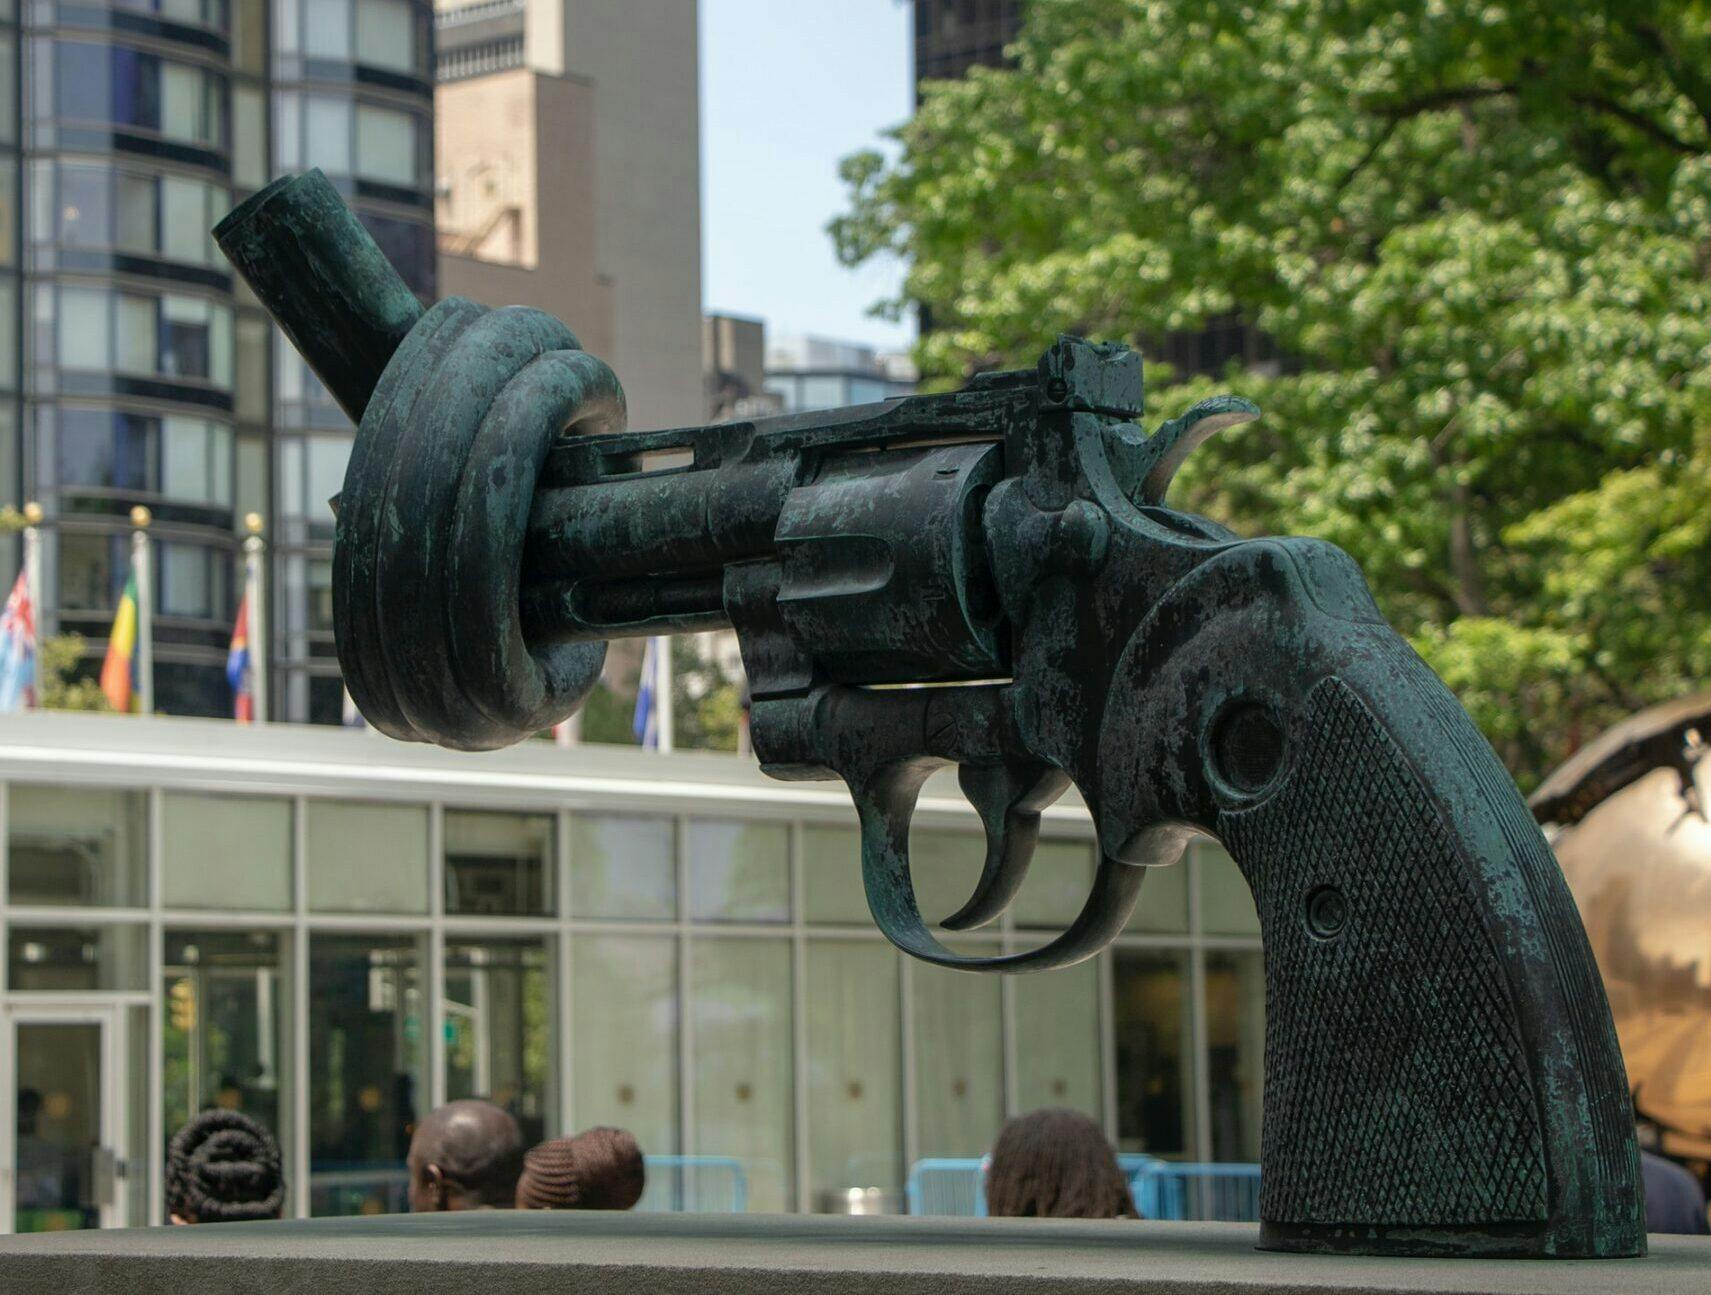 The sculpture 'Non-Violence' at the UN headquarters in New York.